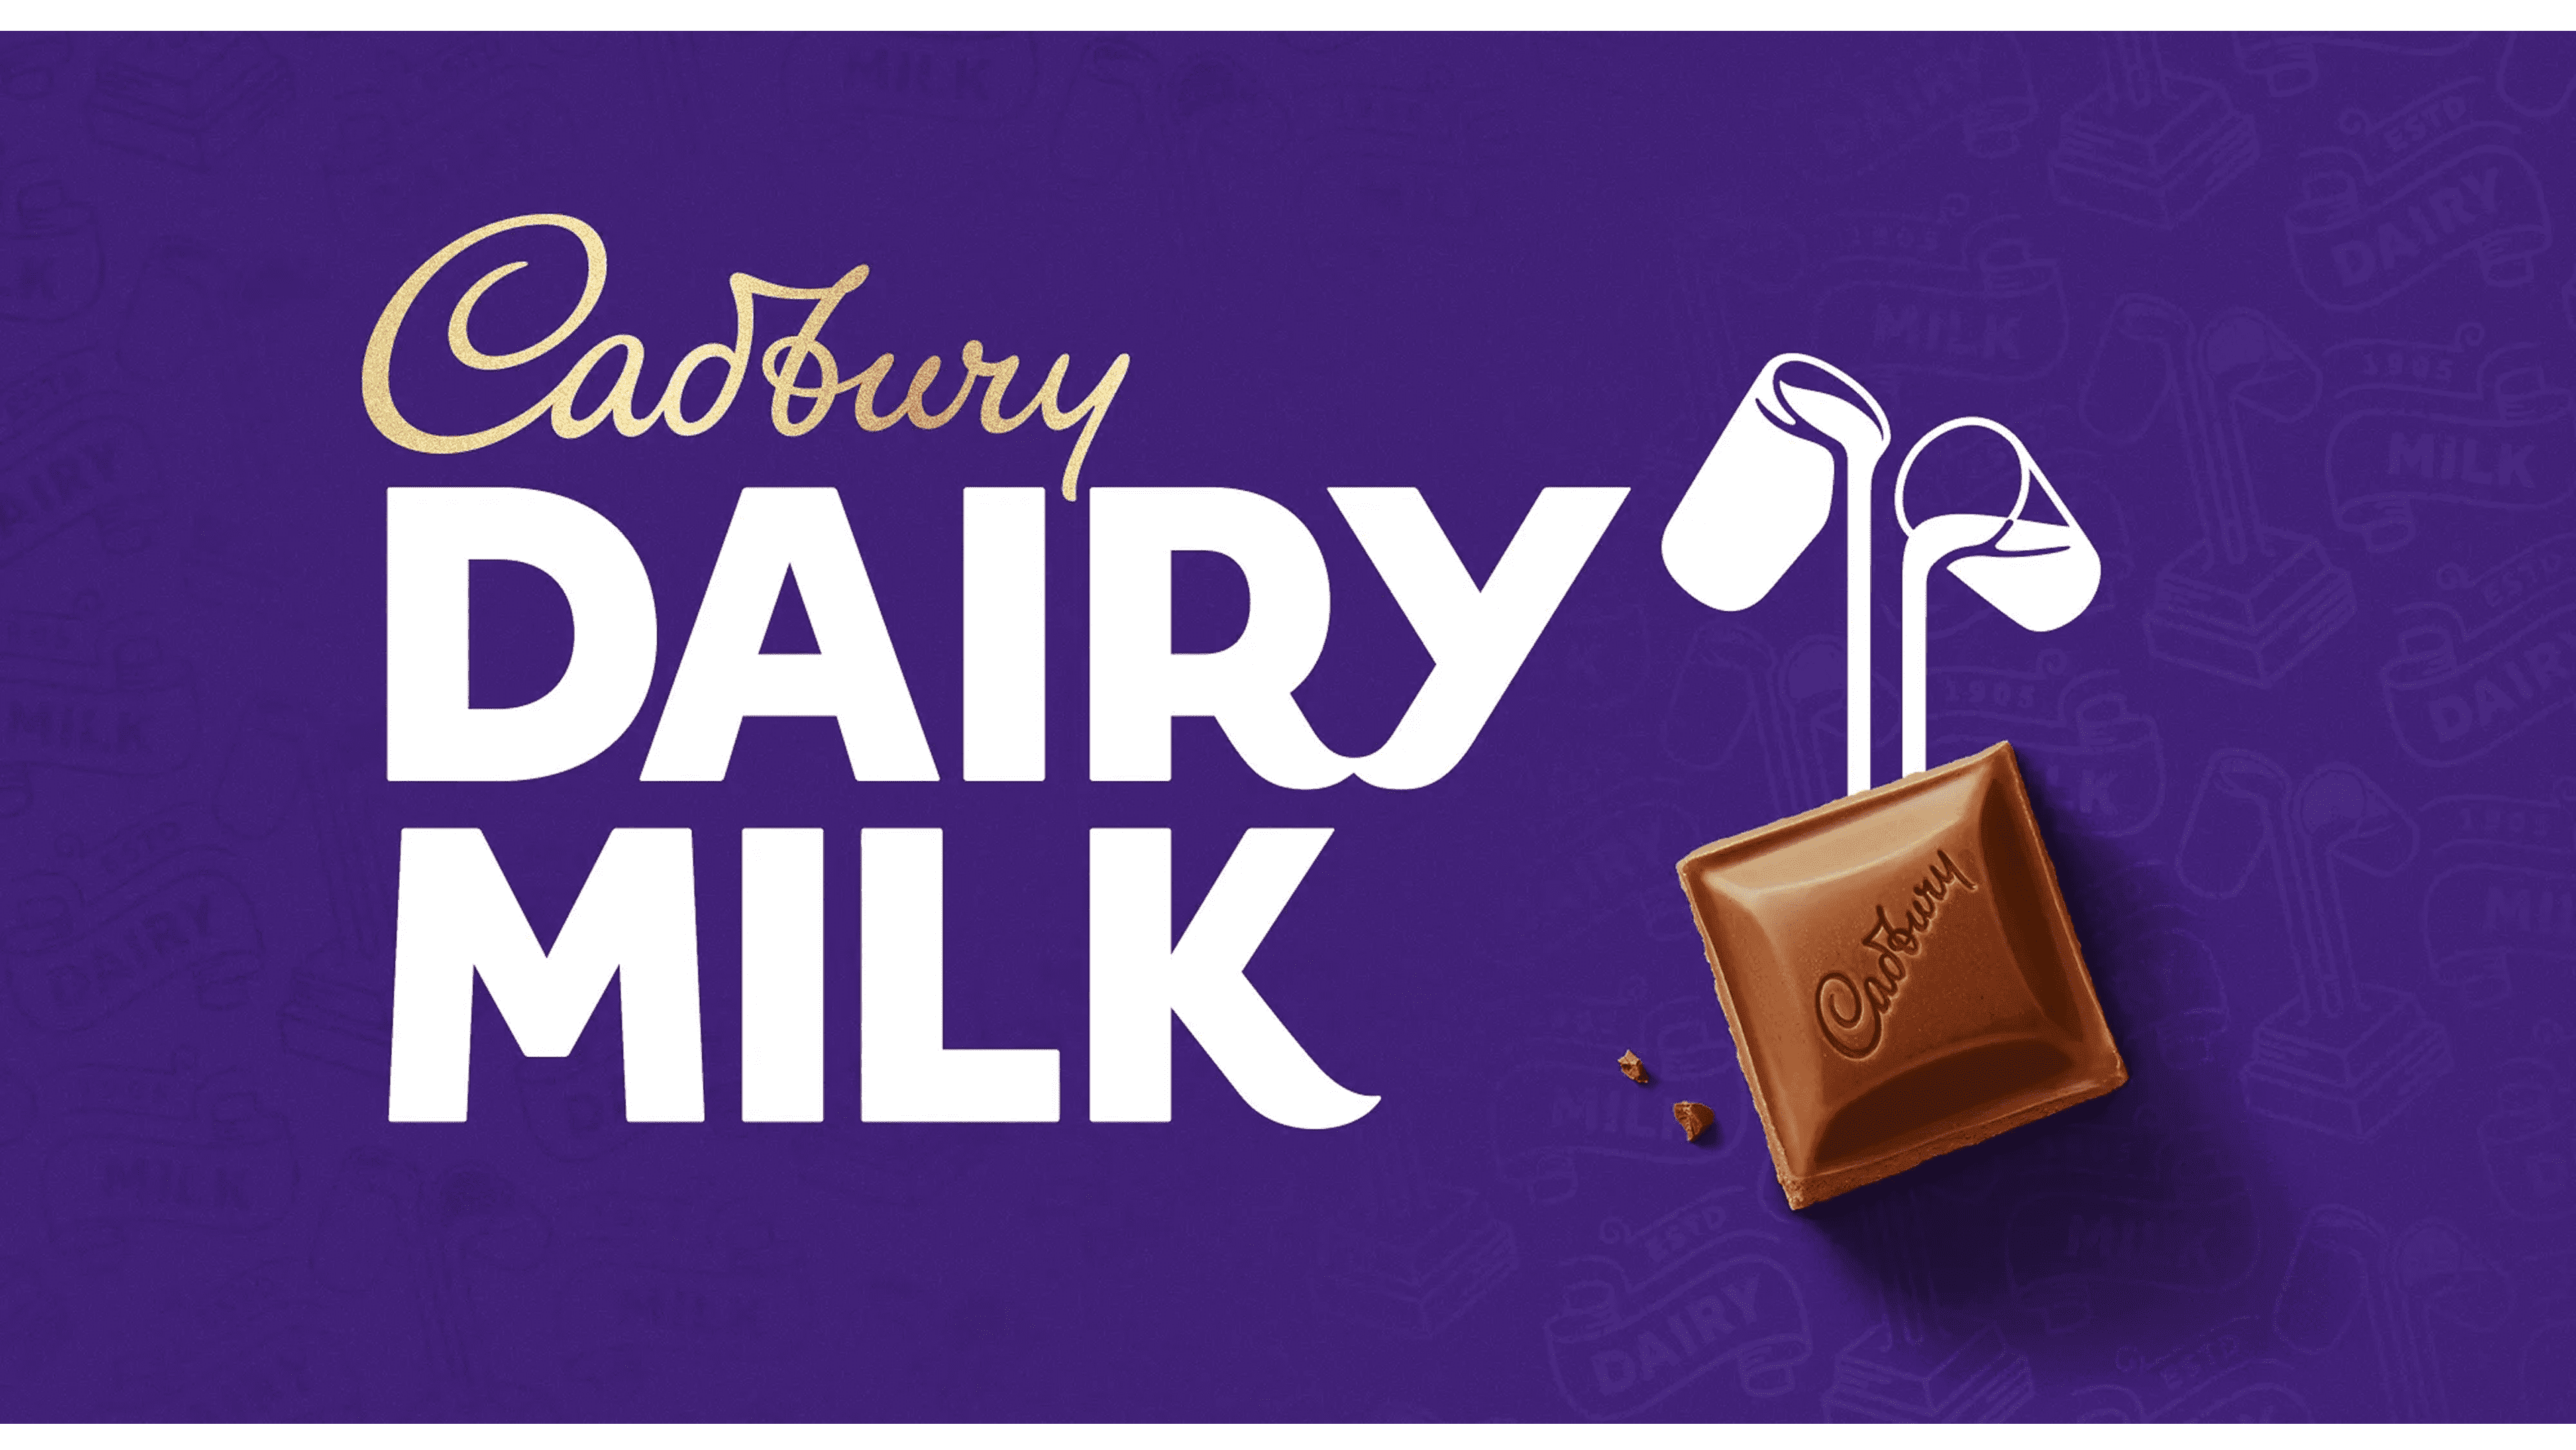 Ogilvy & Cadbury Dairy Milk launch a new campaign for Silk Hazelnut